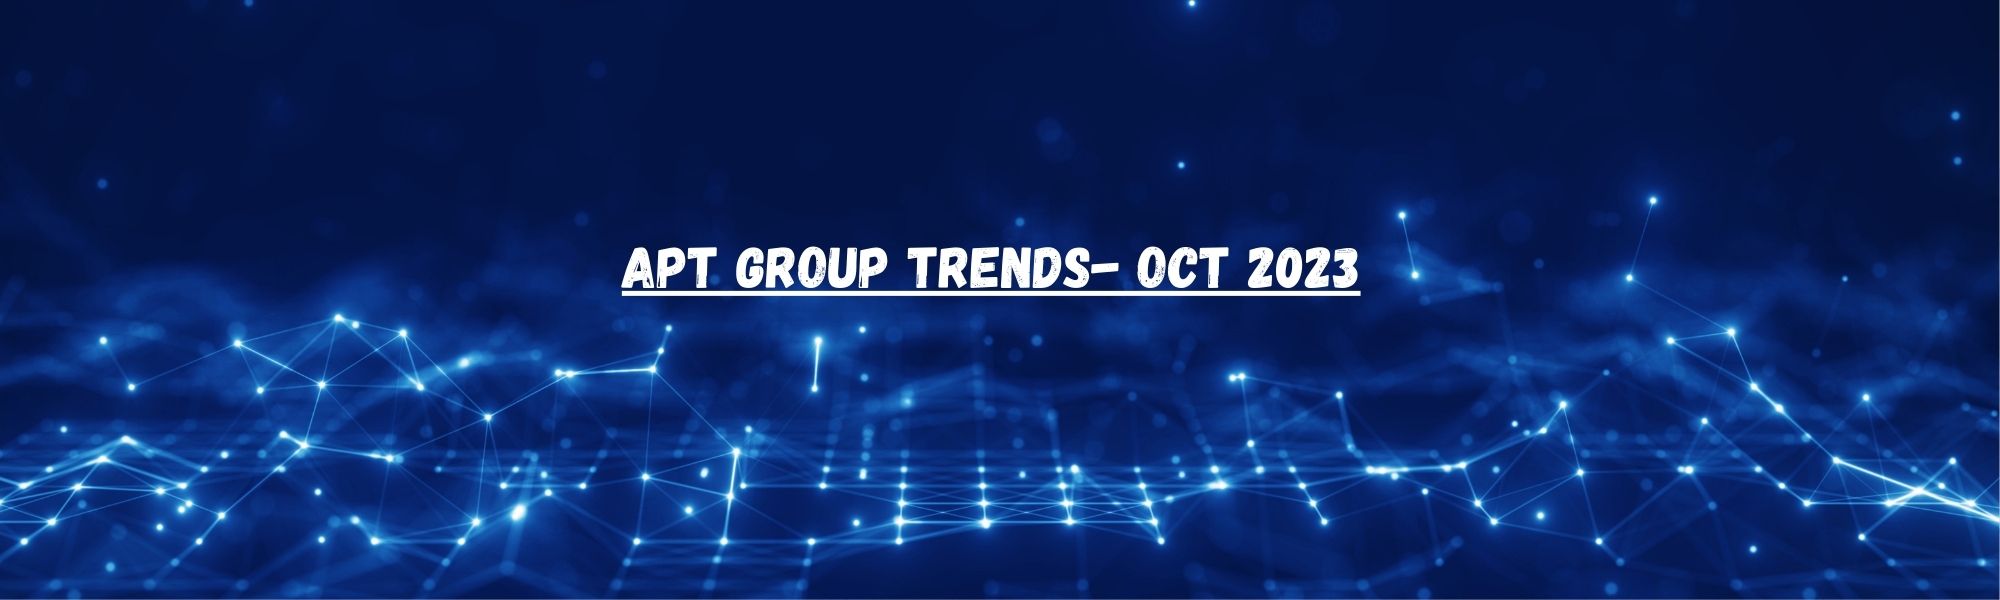 apt group trends 0ct